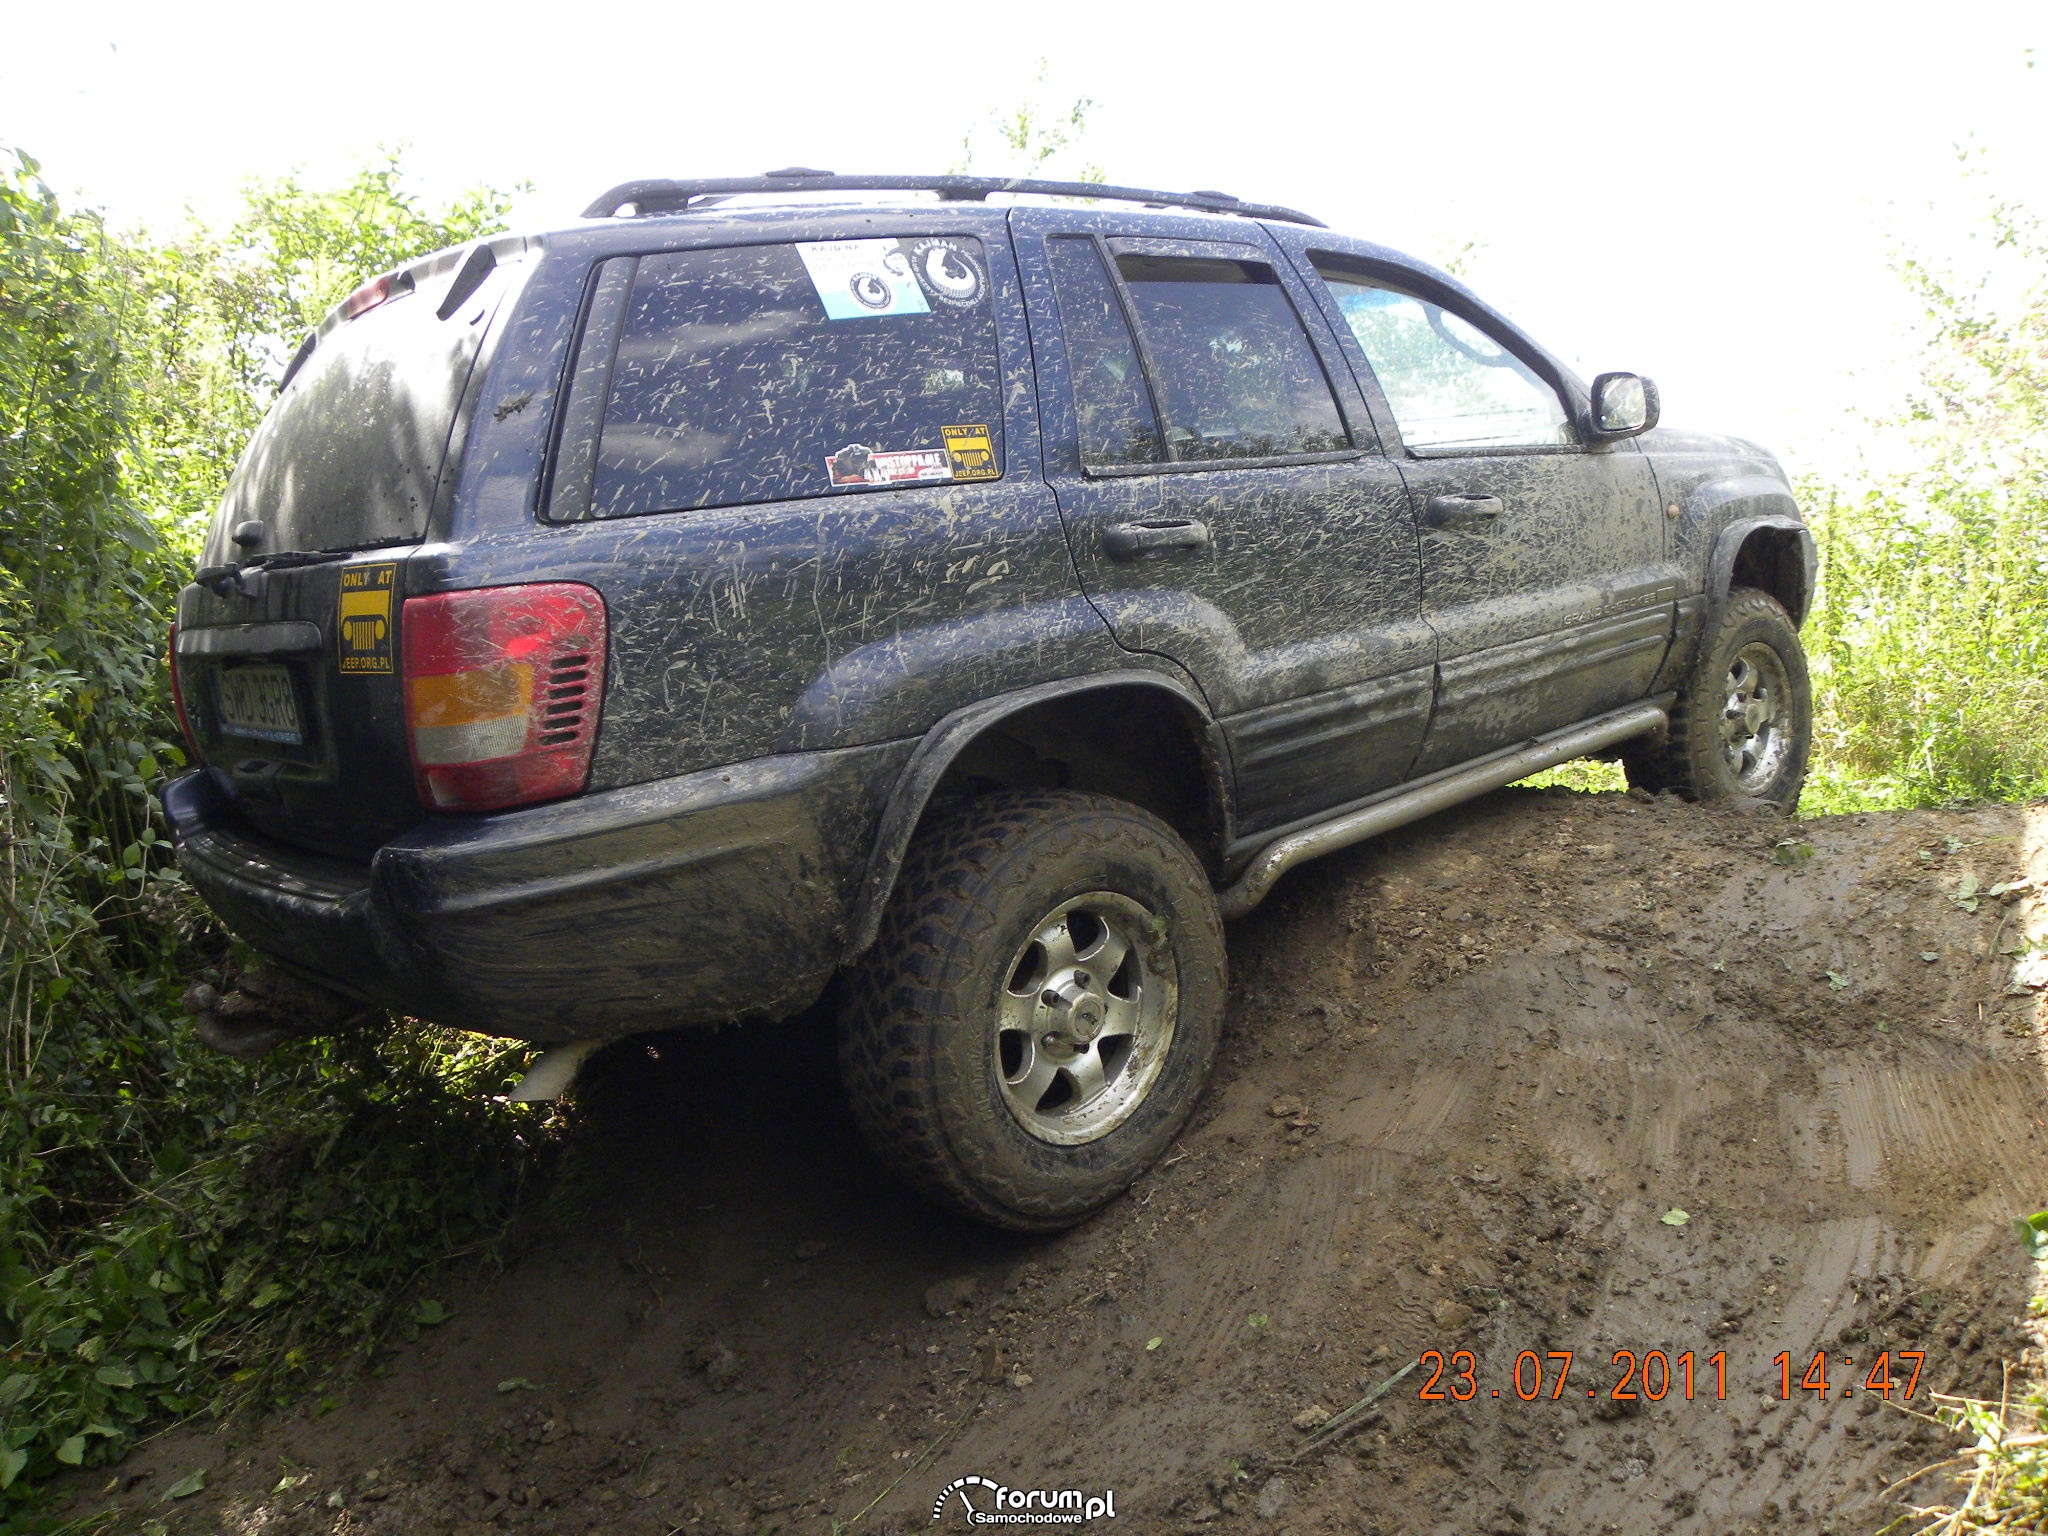 Jeep cherokee off road forum #4